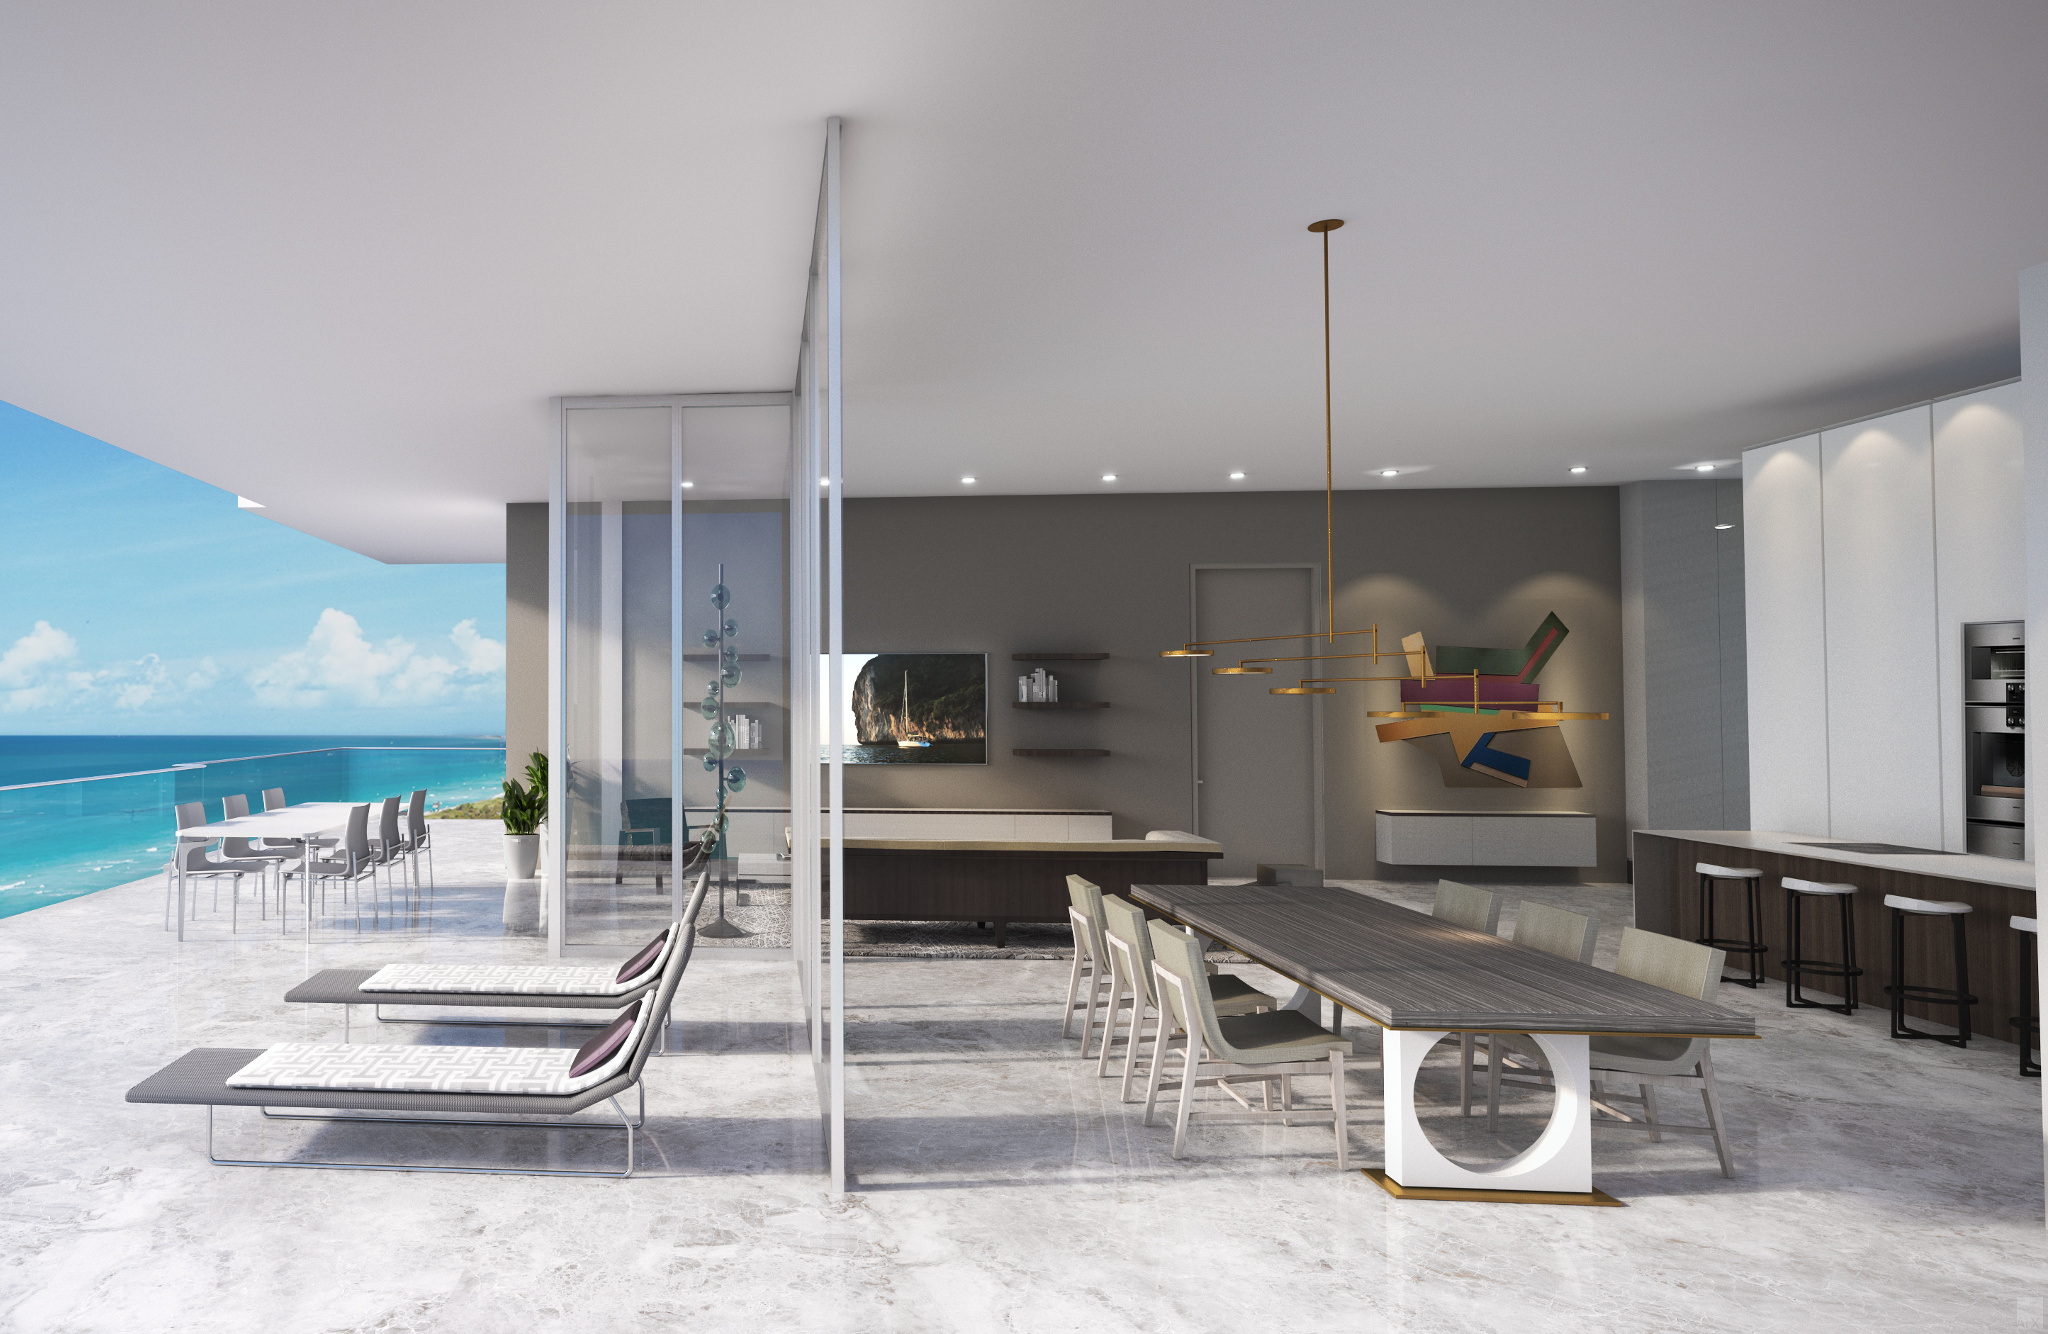 Penthouse at L’Atelier Residences, Miami Beach - Interiors